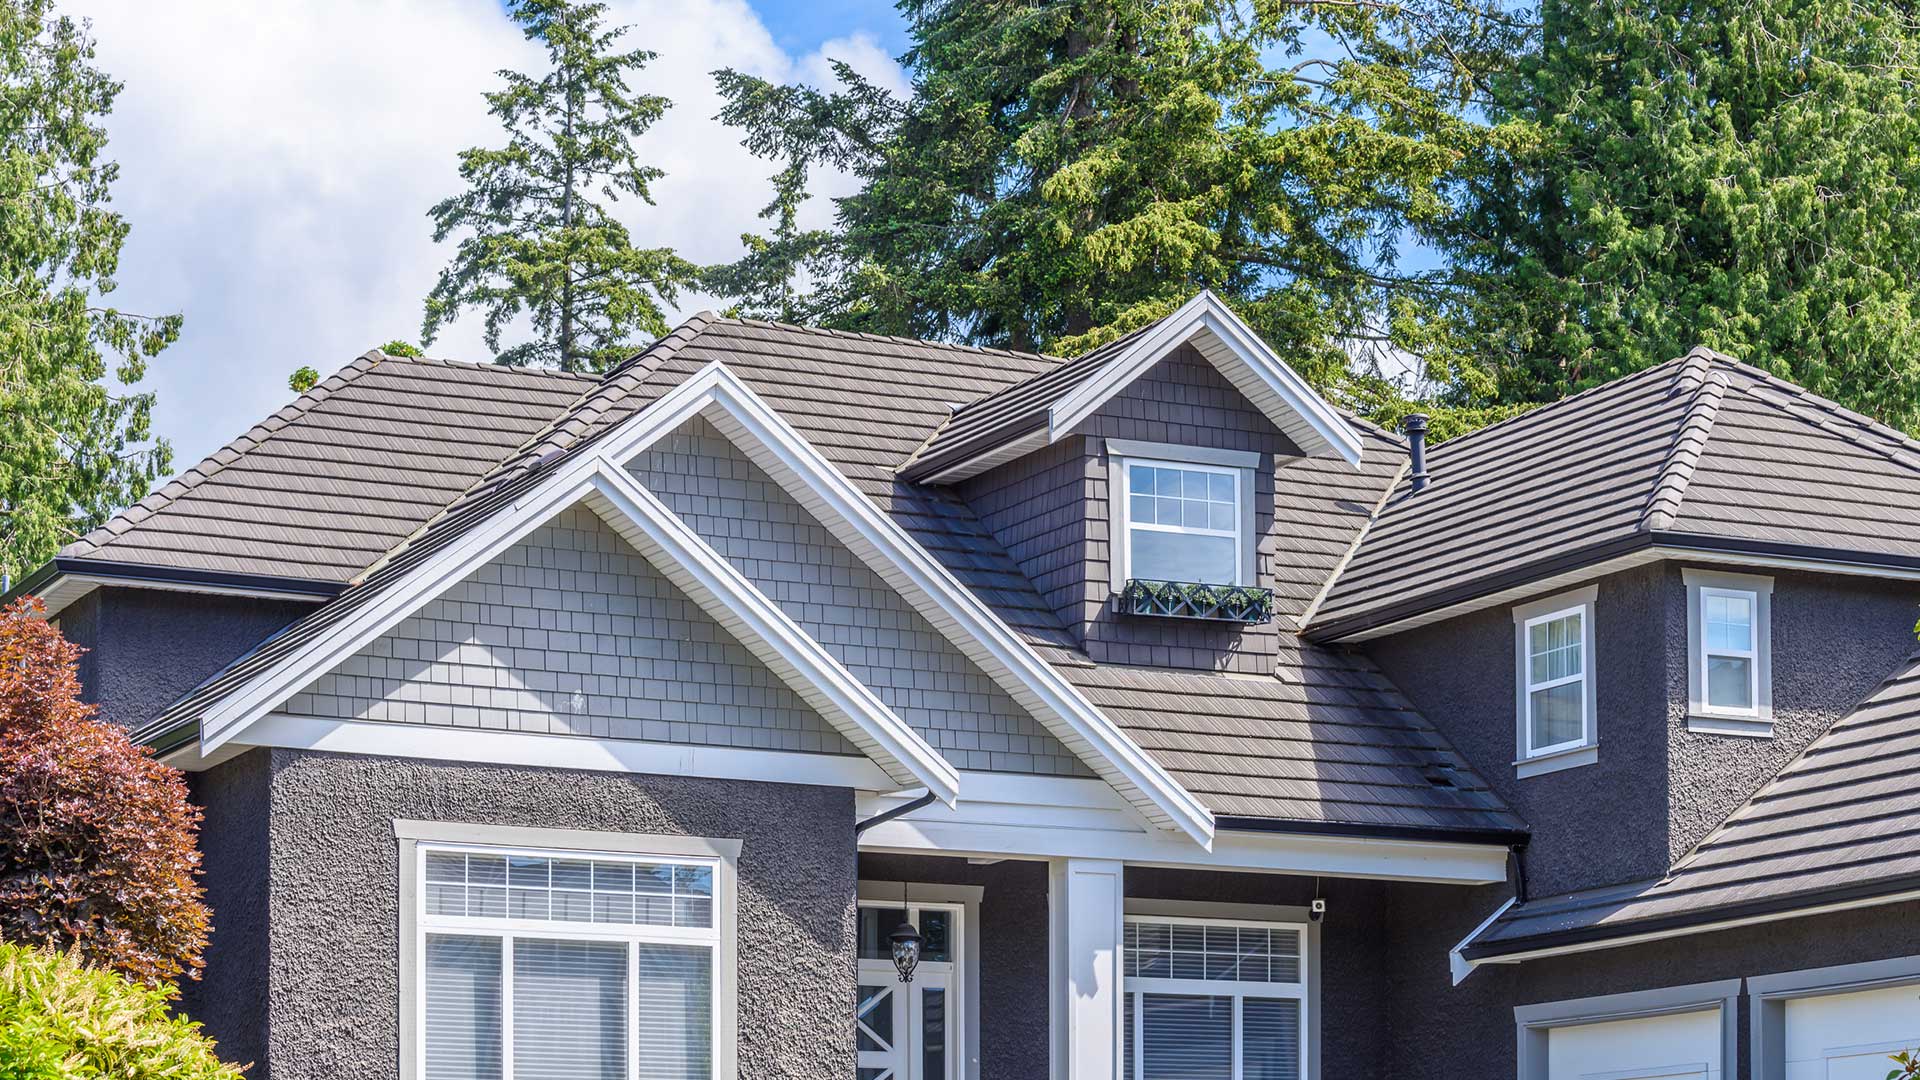 The mandatory aspects of Roof repairs